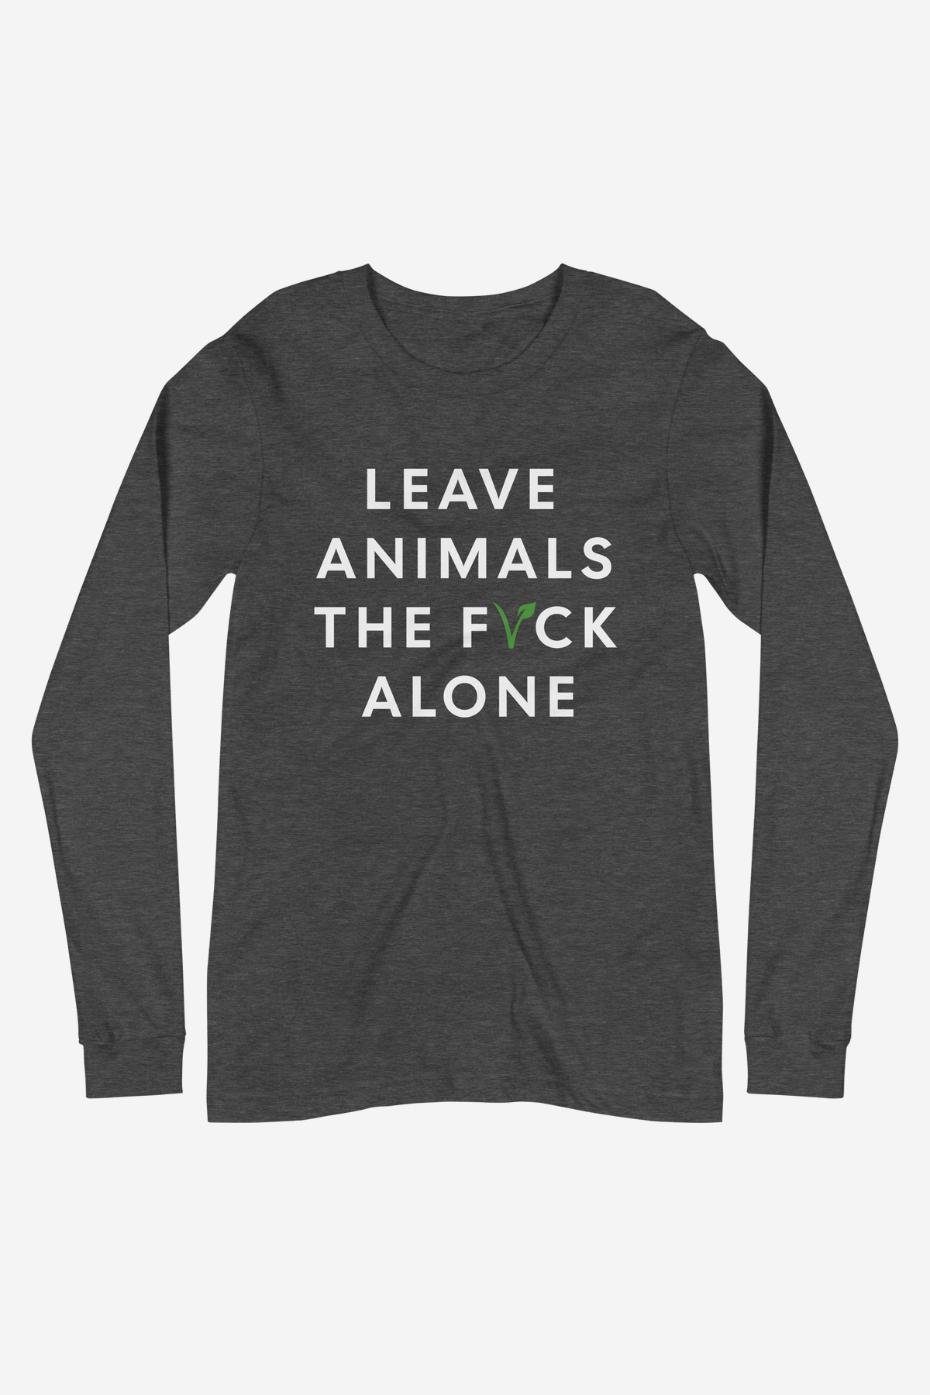 Leave Animals Alone Unisex Long Sleeve Tee